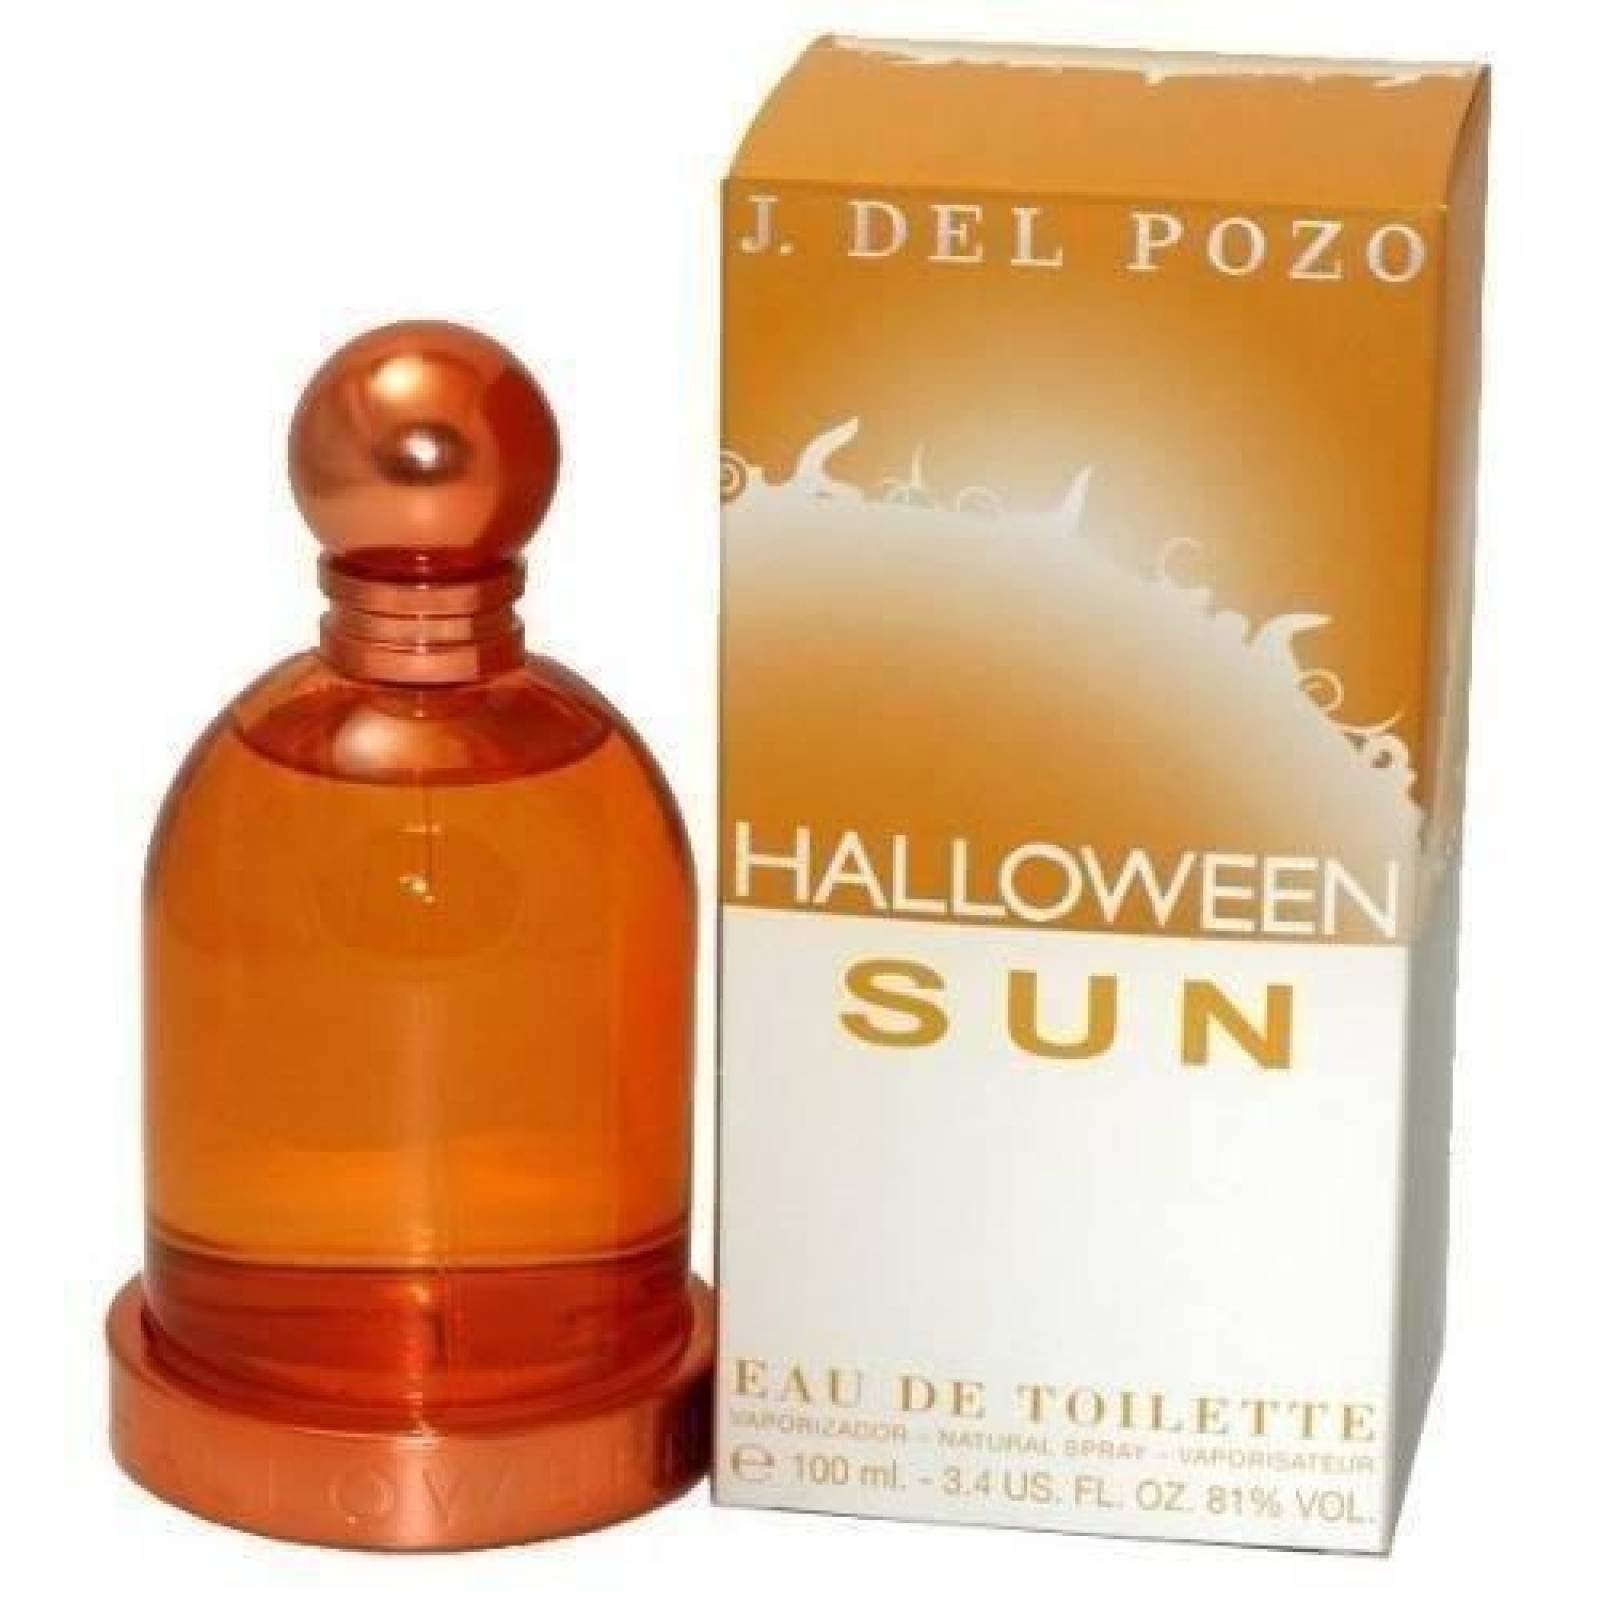 Halloween Sun Dama 100 Ml J. Del Pozo Spray - Original